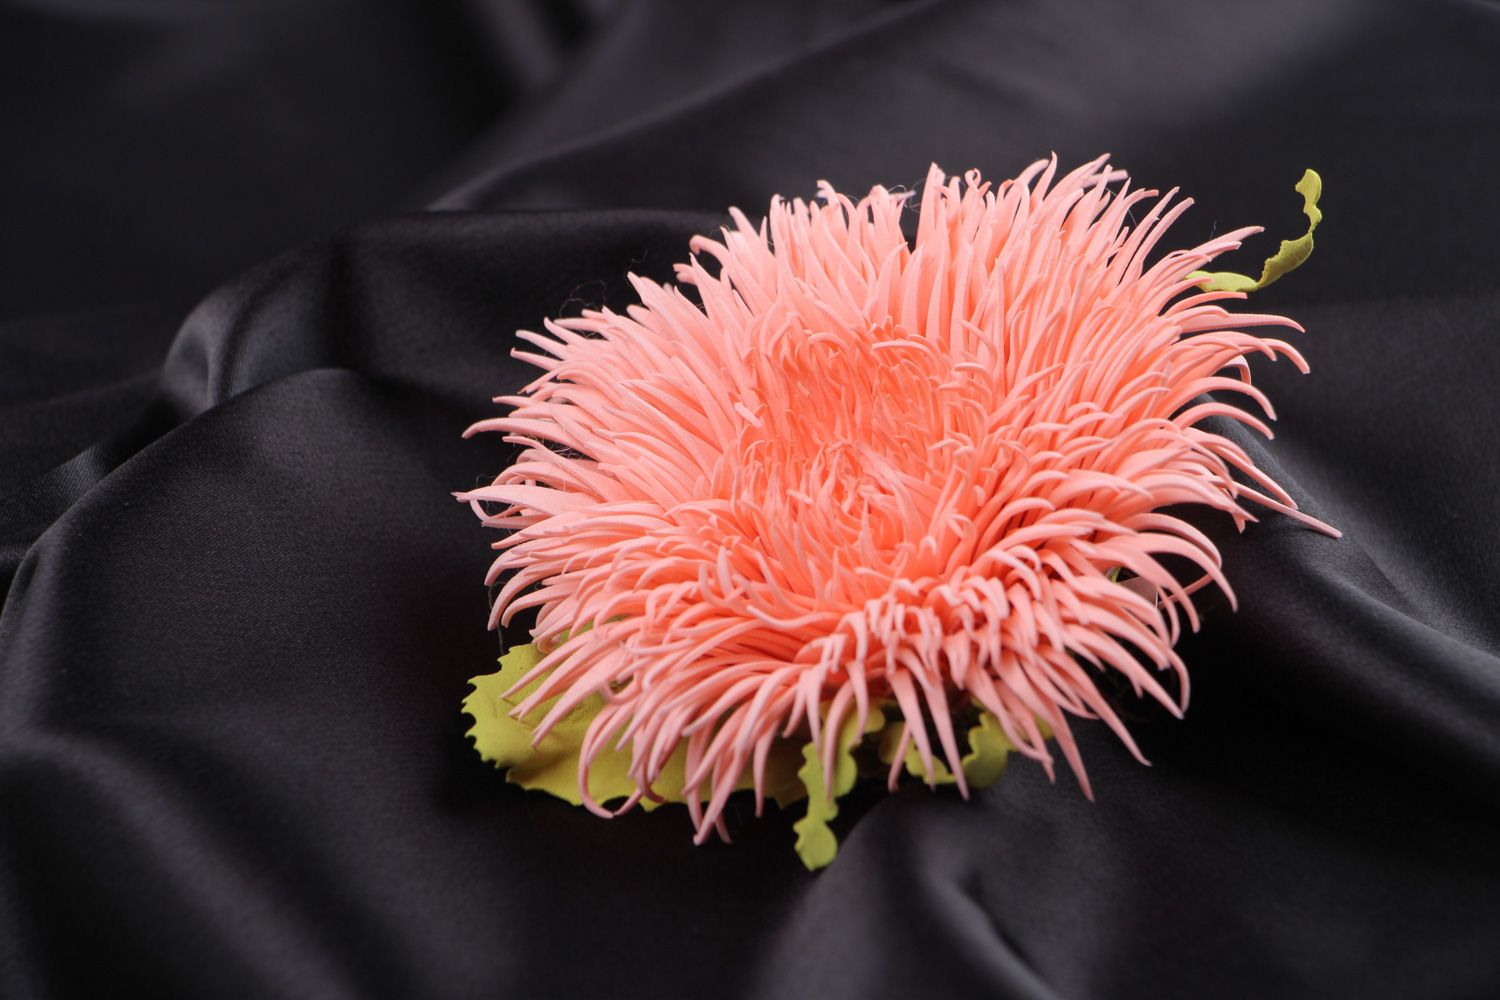 Broche fleur de foamiran faite main grande bel accessoire rose cadeau femme photo 1